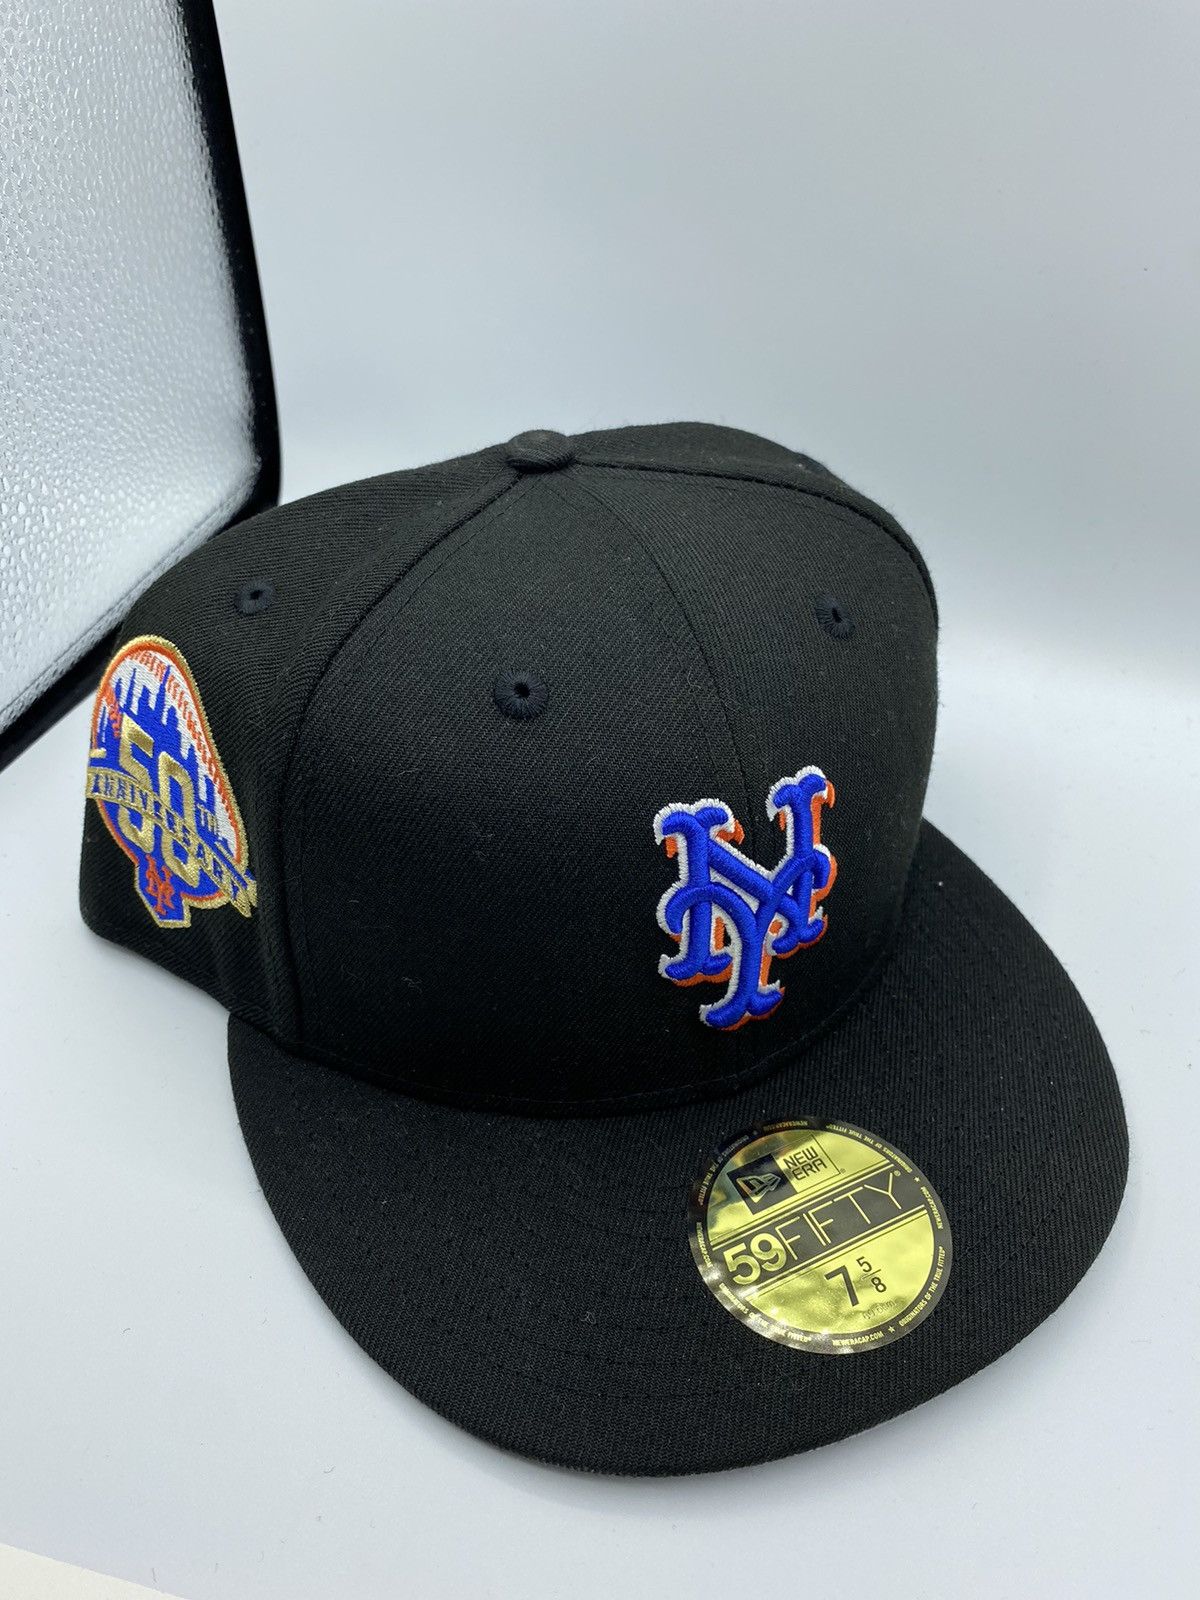 New York Mets 50th Anniversary Patch 🧢: @hatclub @hatclubnoho